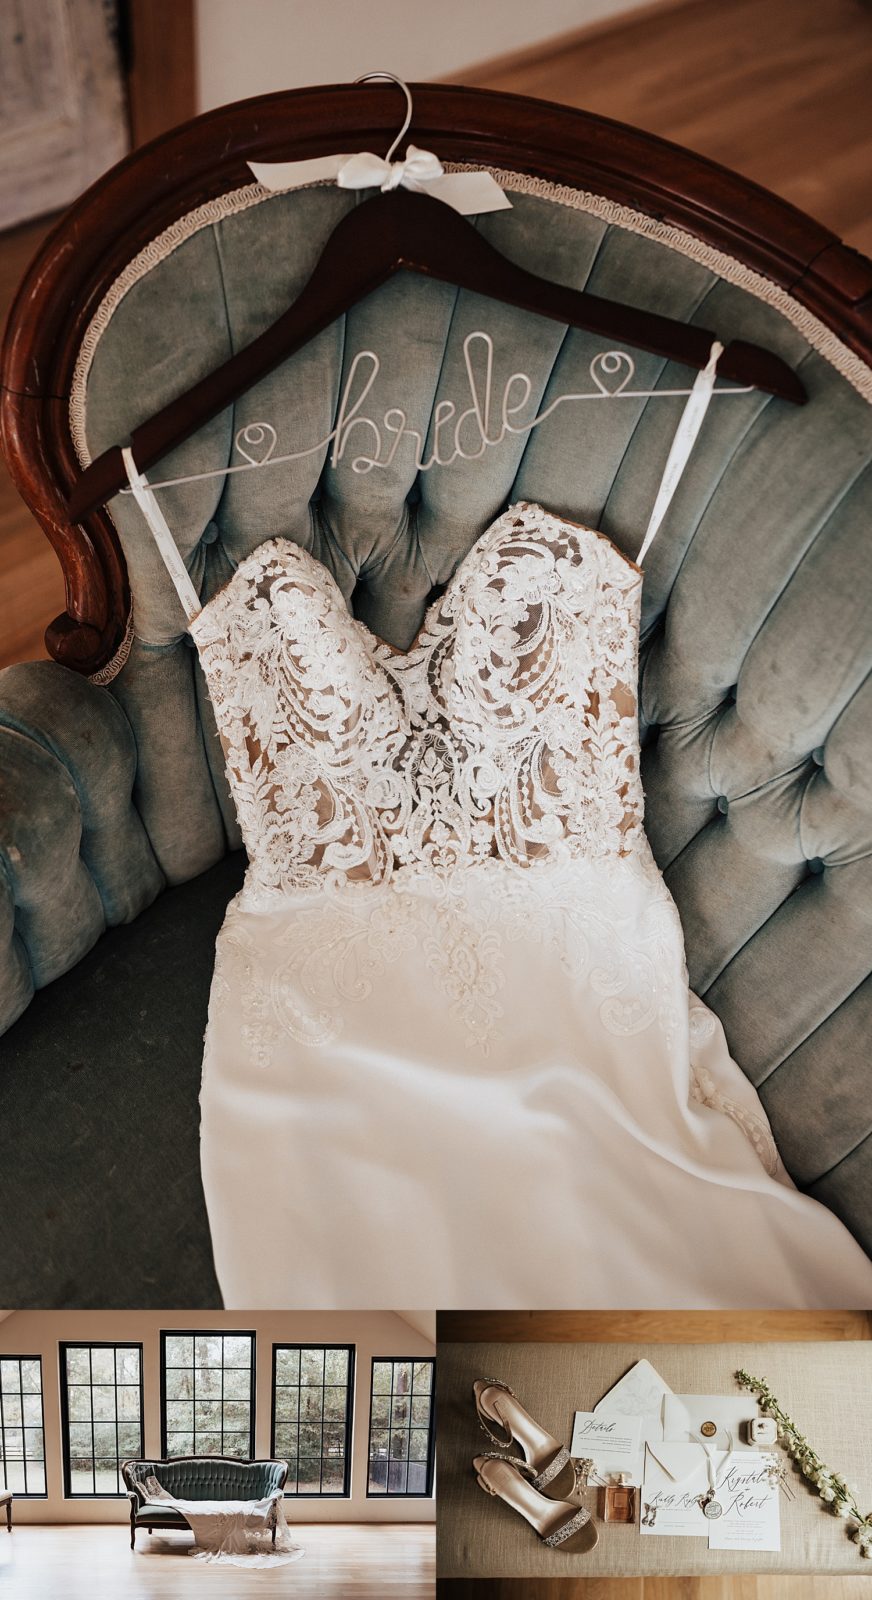 Bridal details at an elegant Houston wedding at The Oak Atelier.